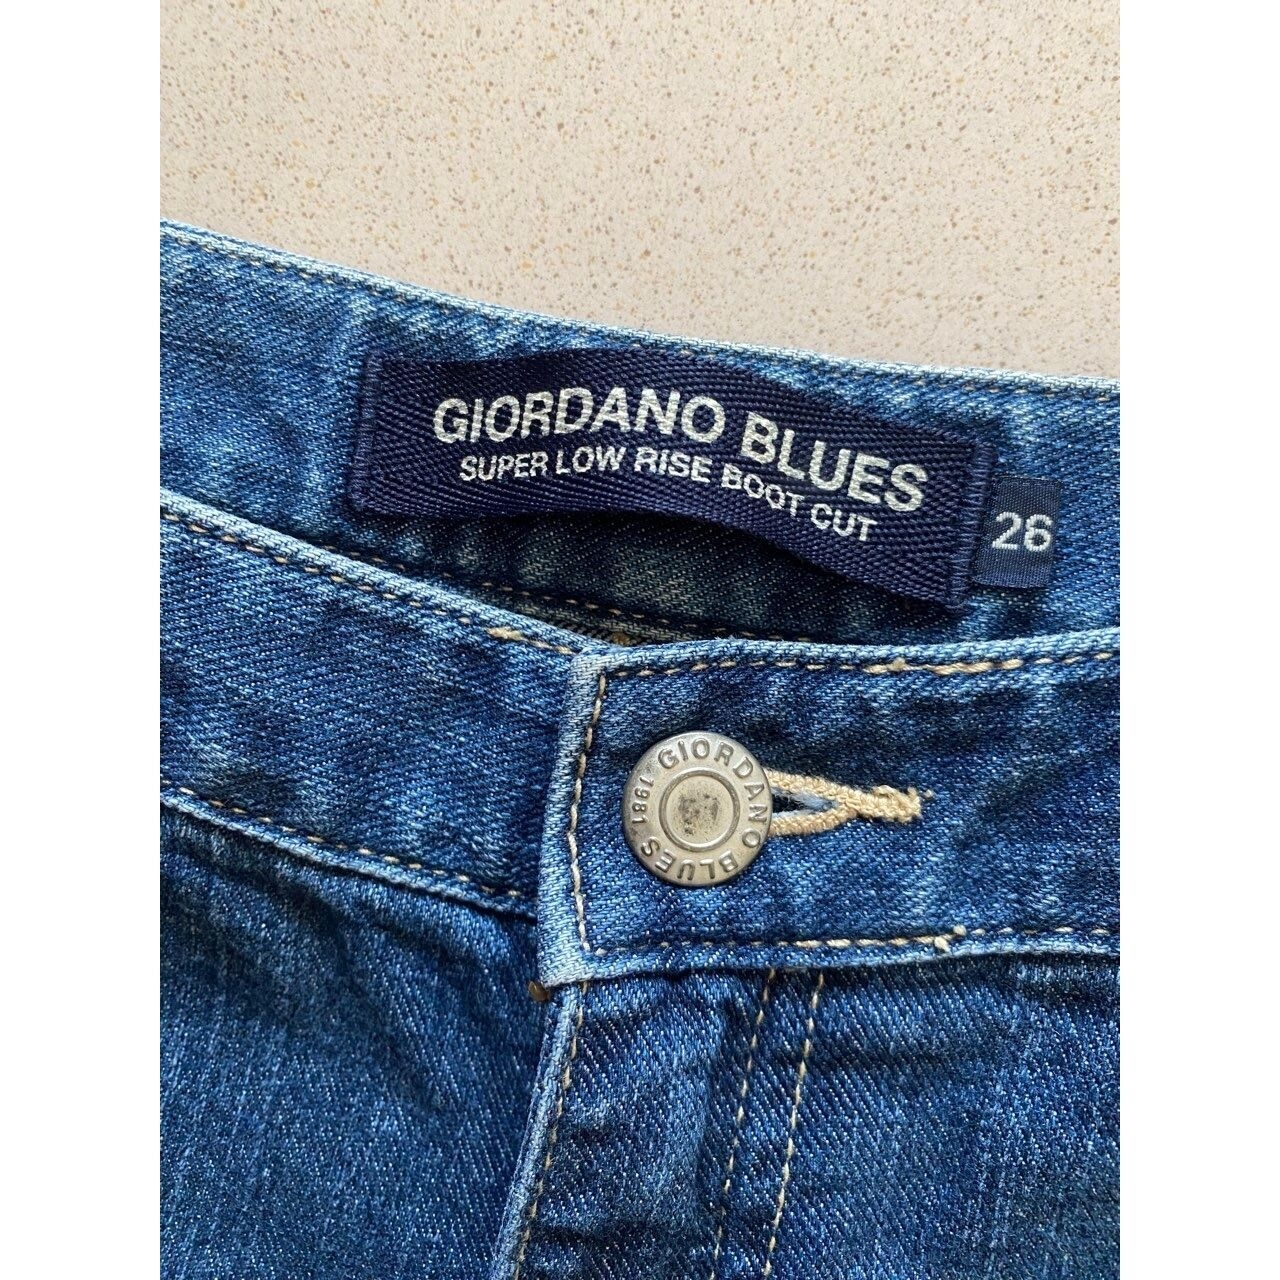 Giordano Blue Jeans Long Pants